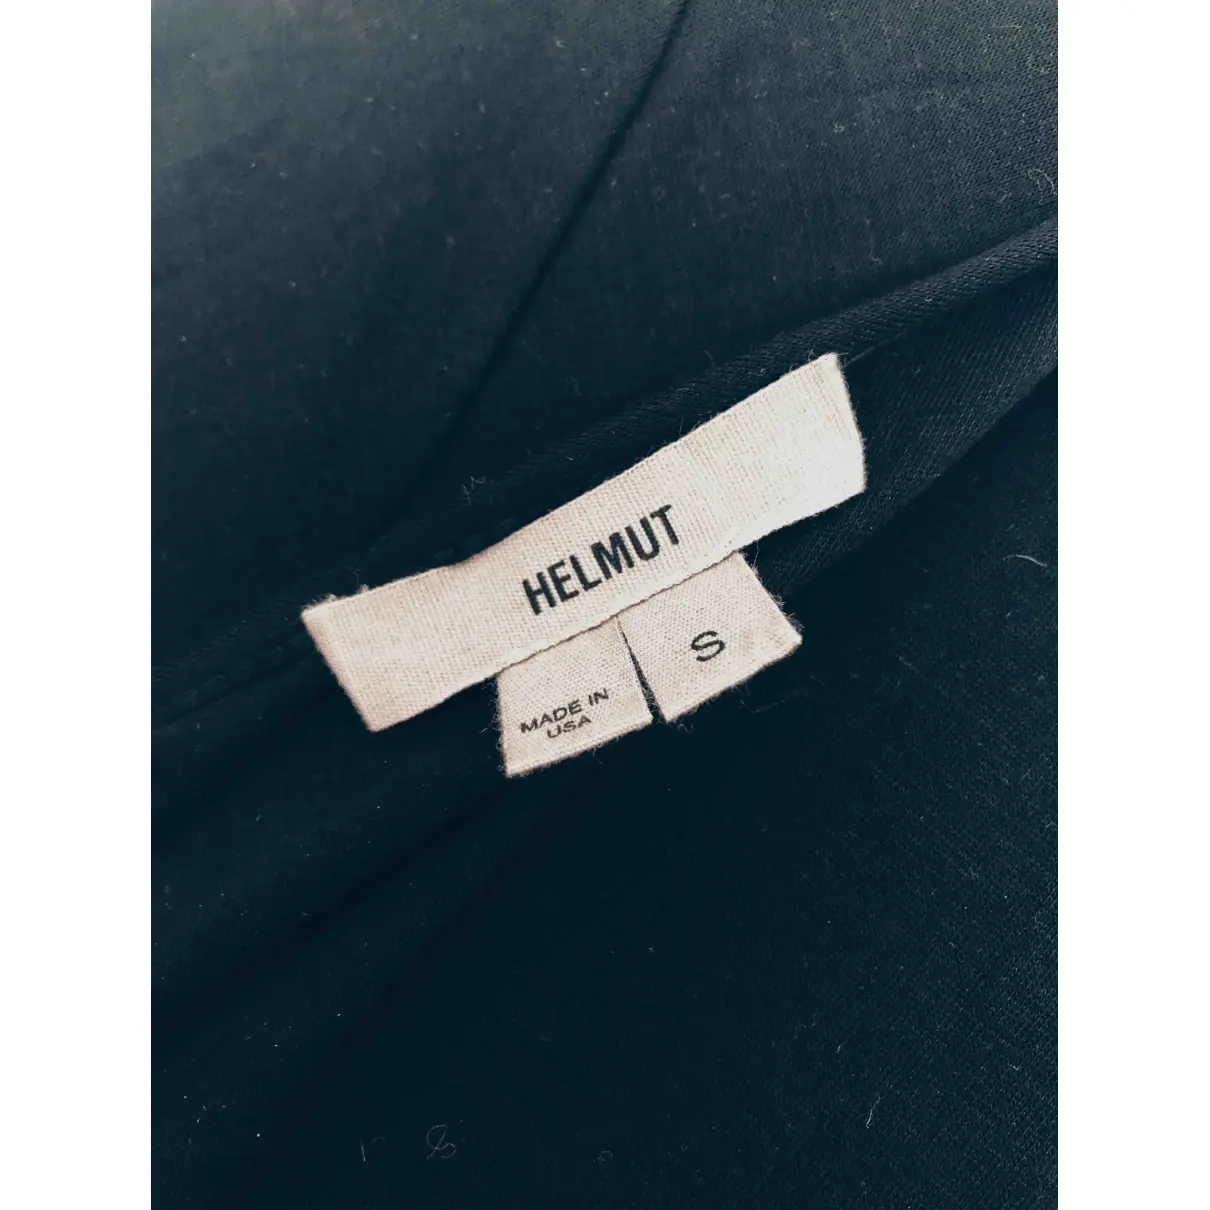 Buy Helmut Helmut Lang Mini dress online